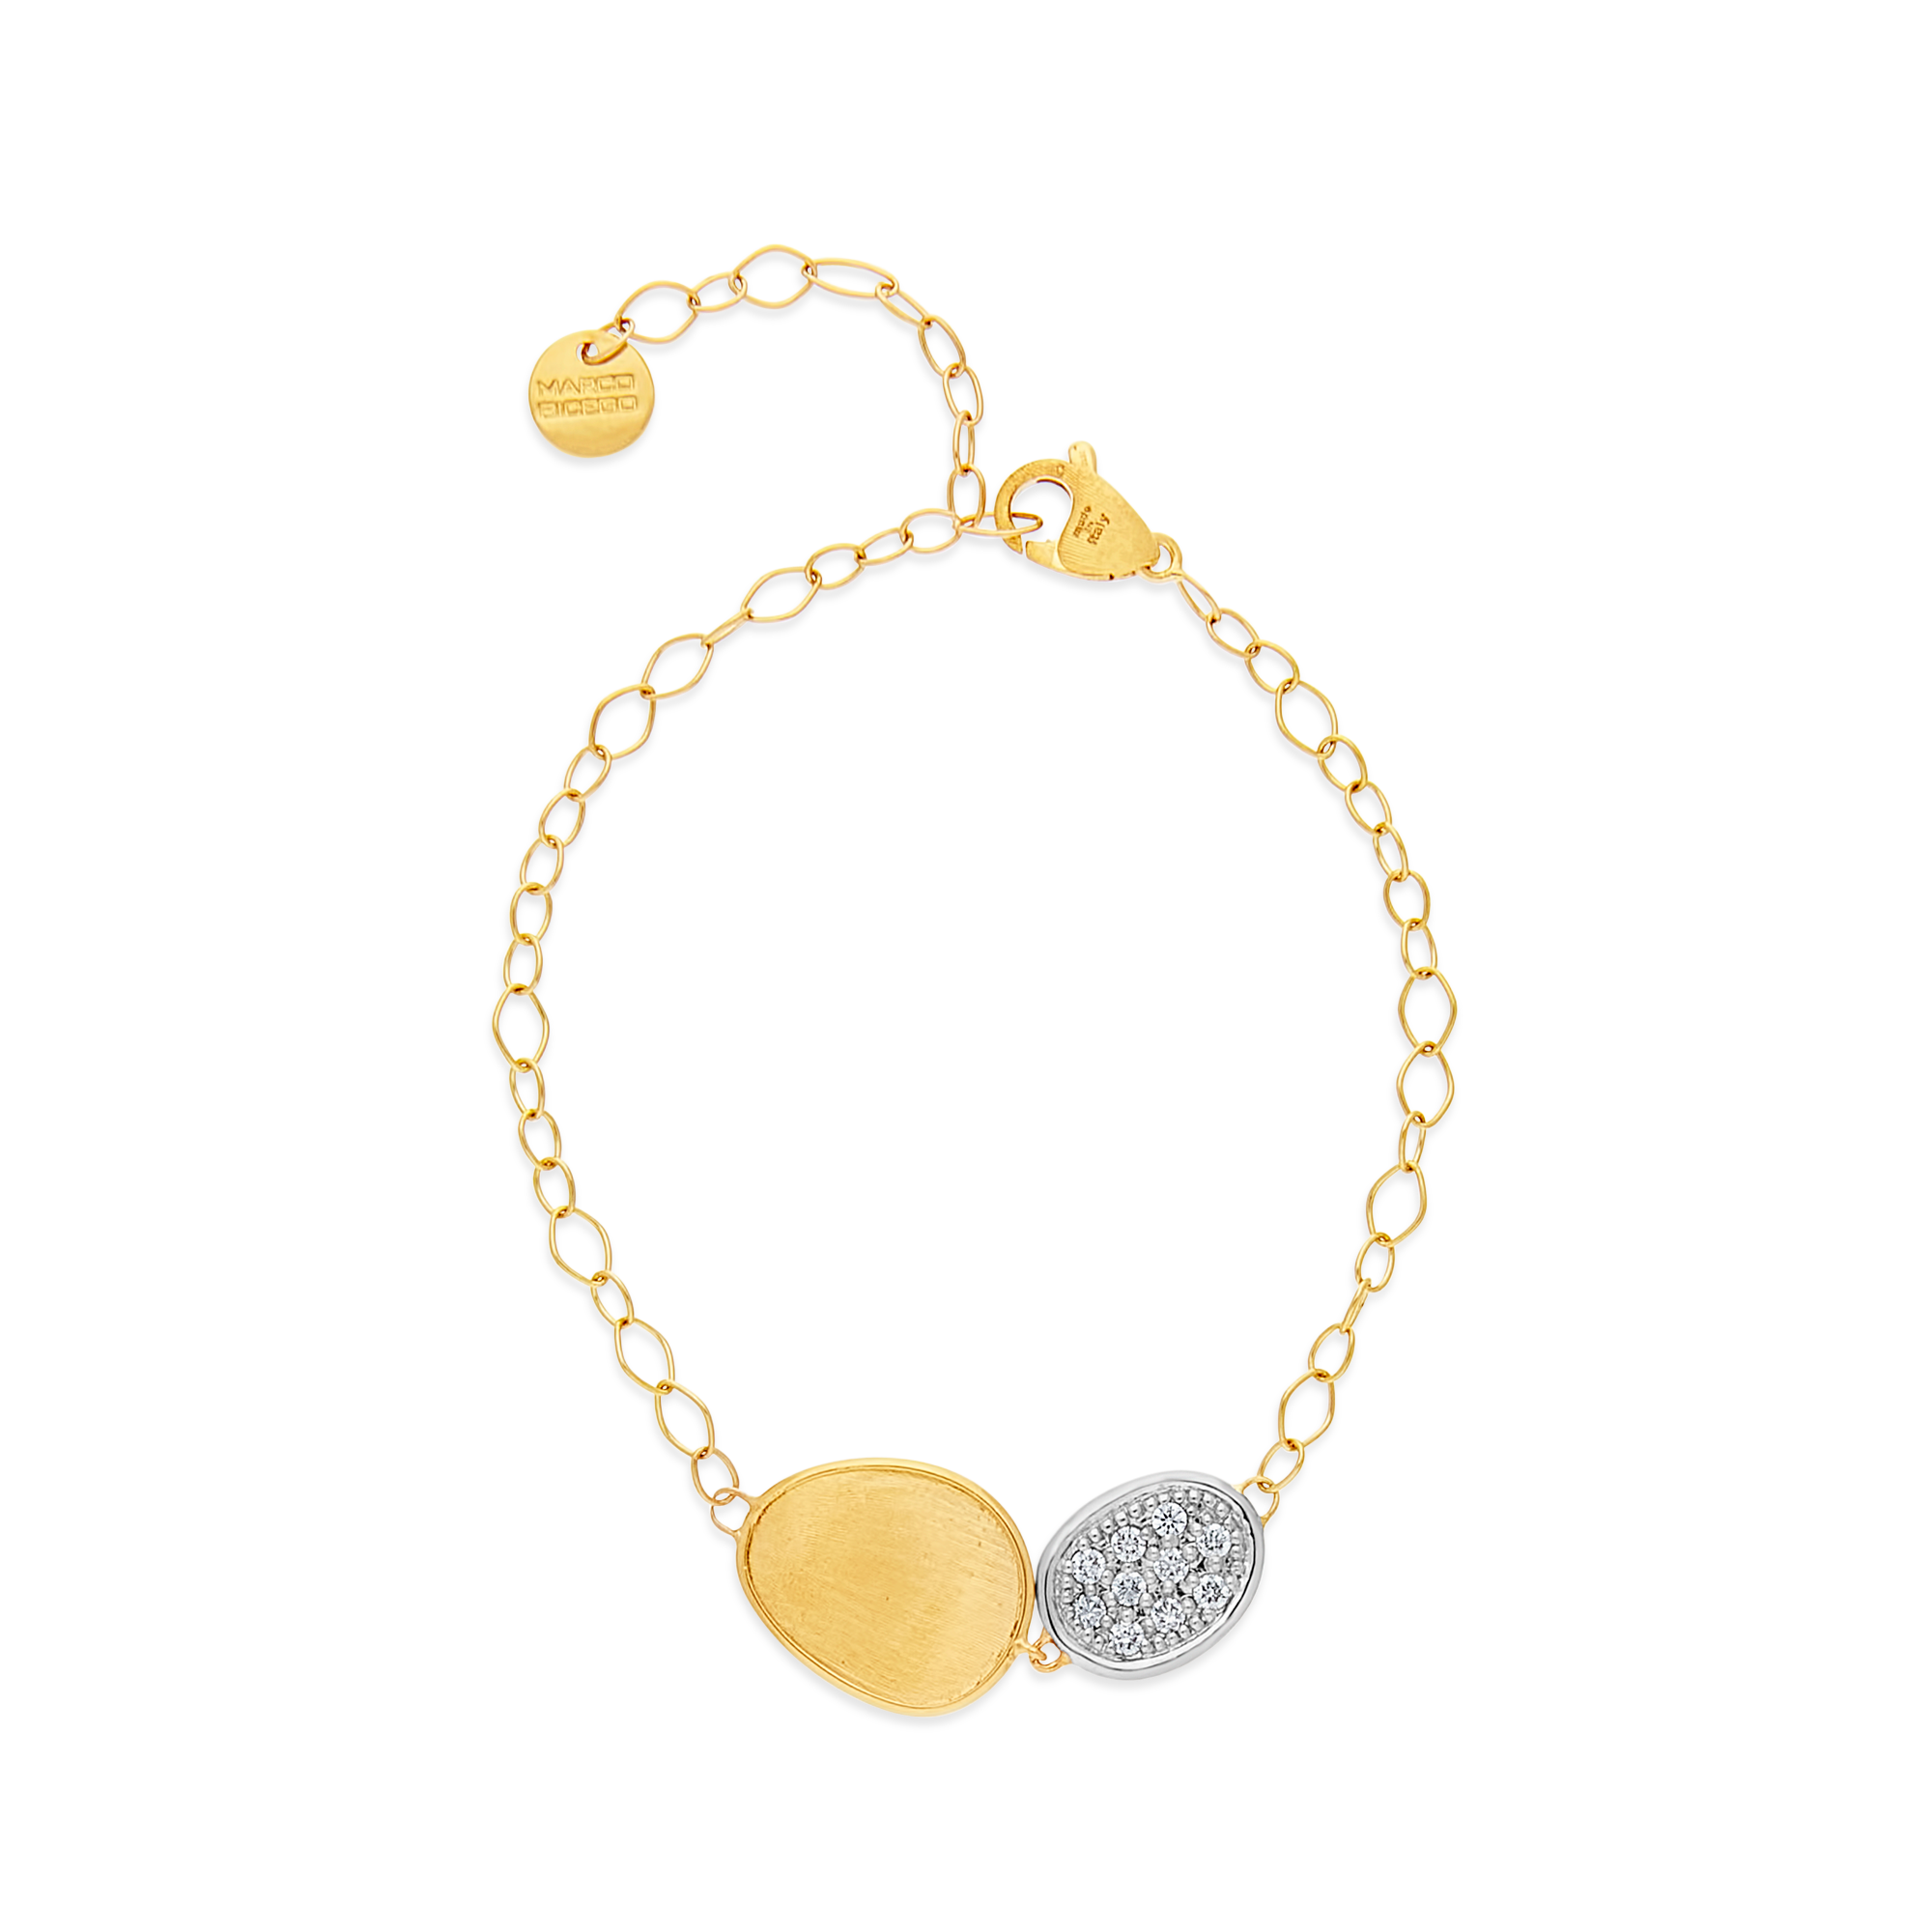 18ct Gold and Diamond "Lunaria" Bracelet Marco Bicego